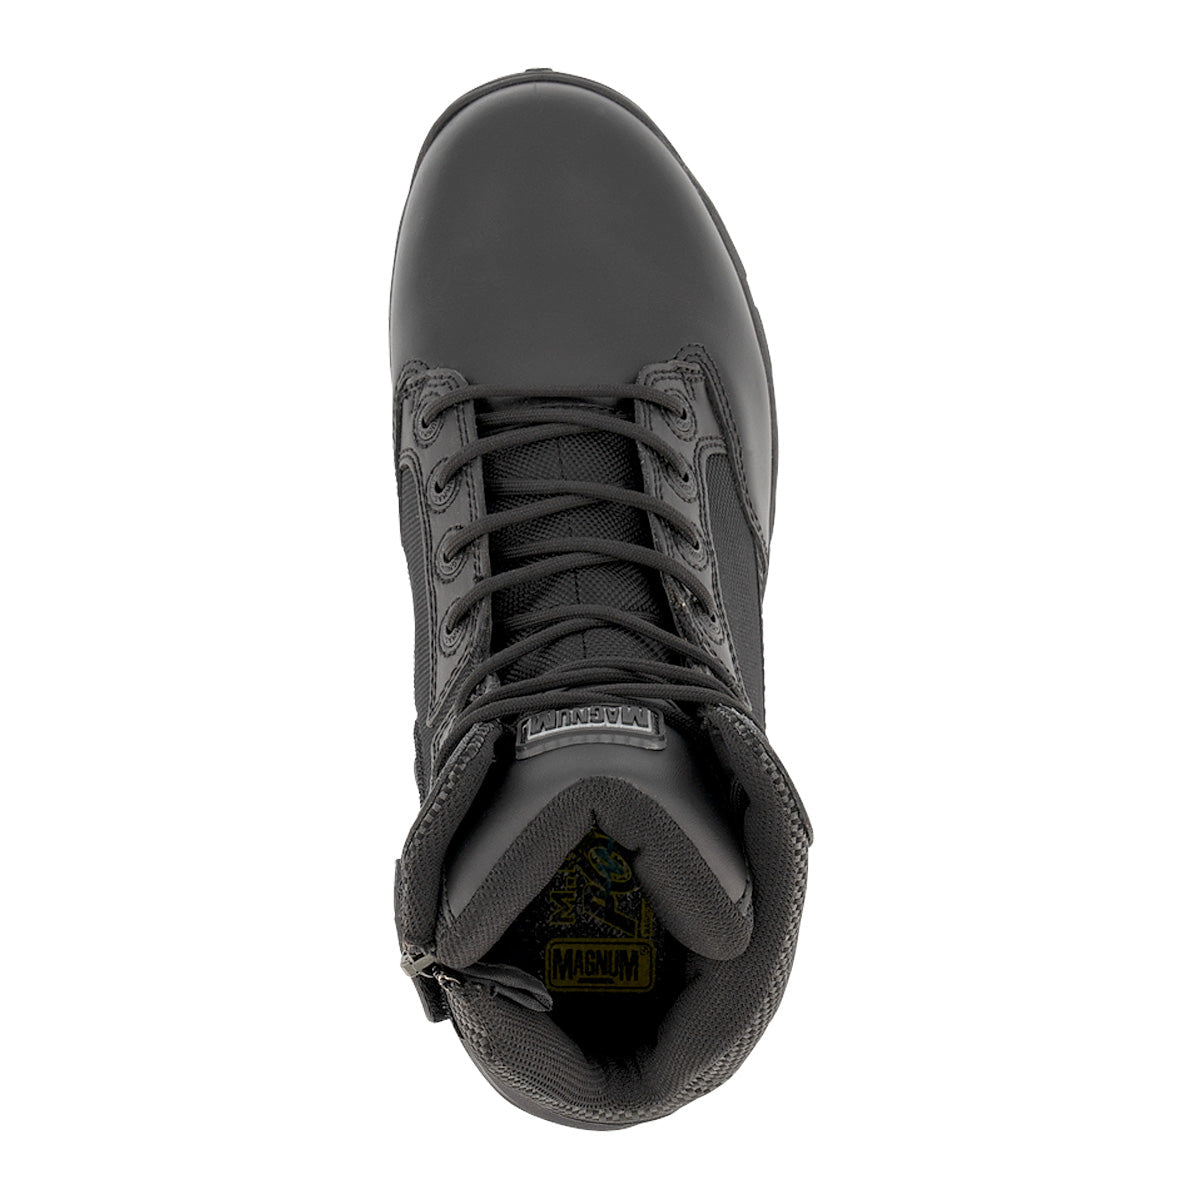 Magnum Strike Force 6.0 Side-Zip Composite Toe Women's Boot Black Tactical Distributors Ltd New Zealand